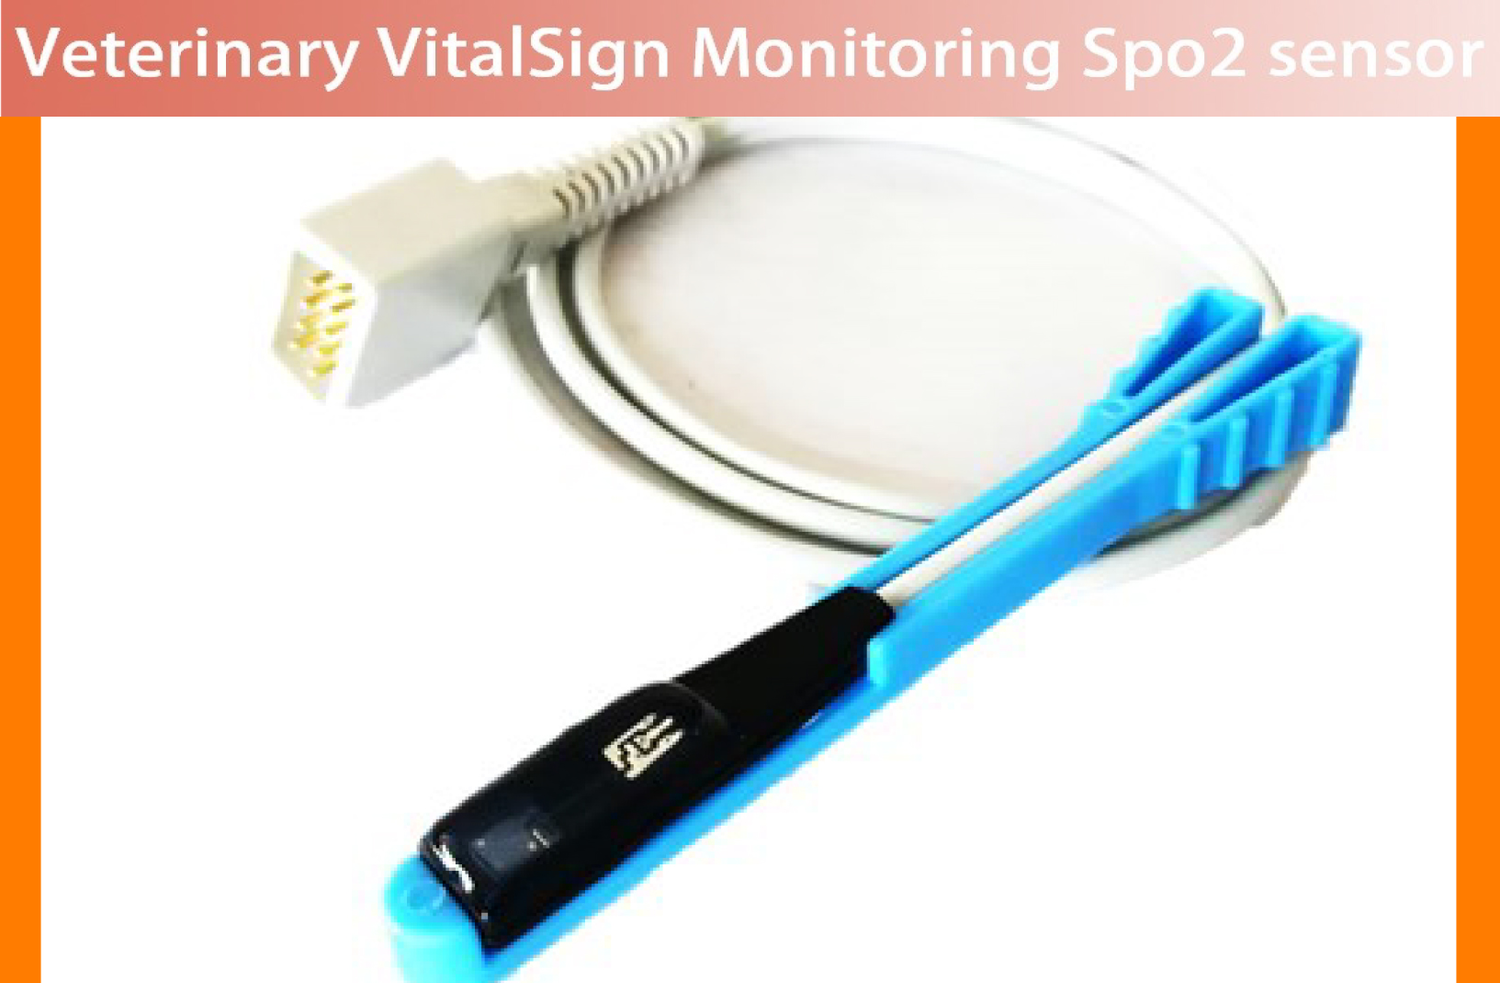 <p><span style="font-weight: bold;">Veterinary VitalSign Monitoring Spo2 sensor</span><br></p>